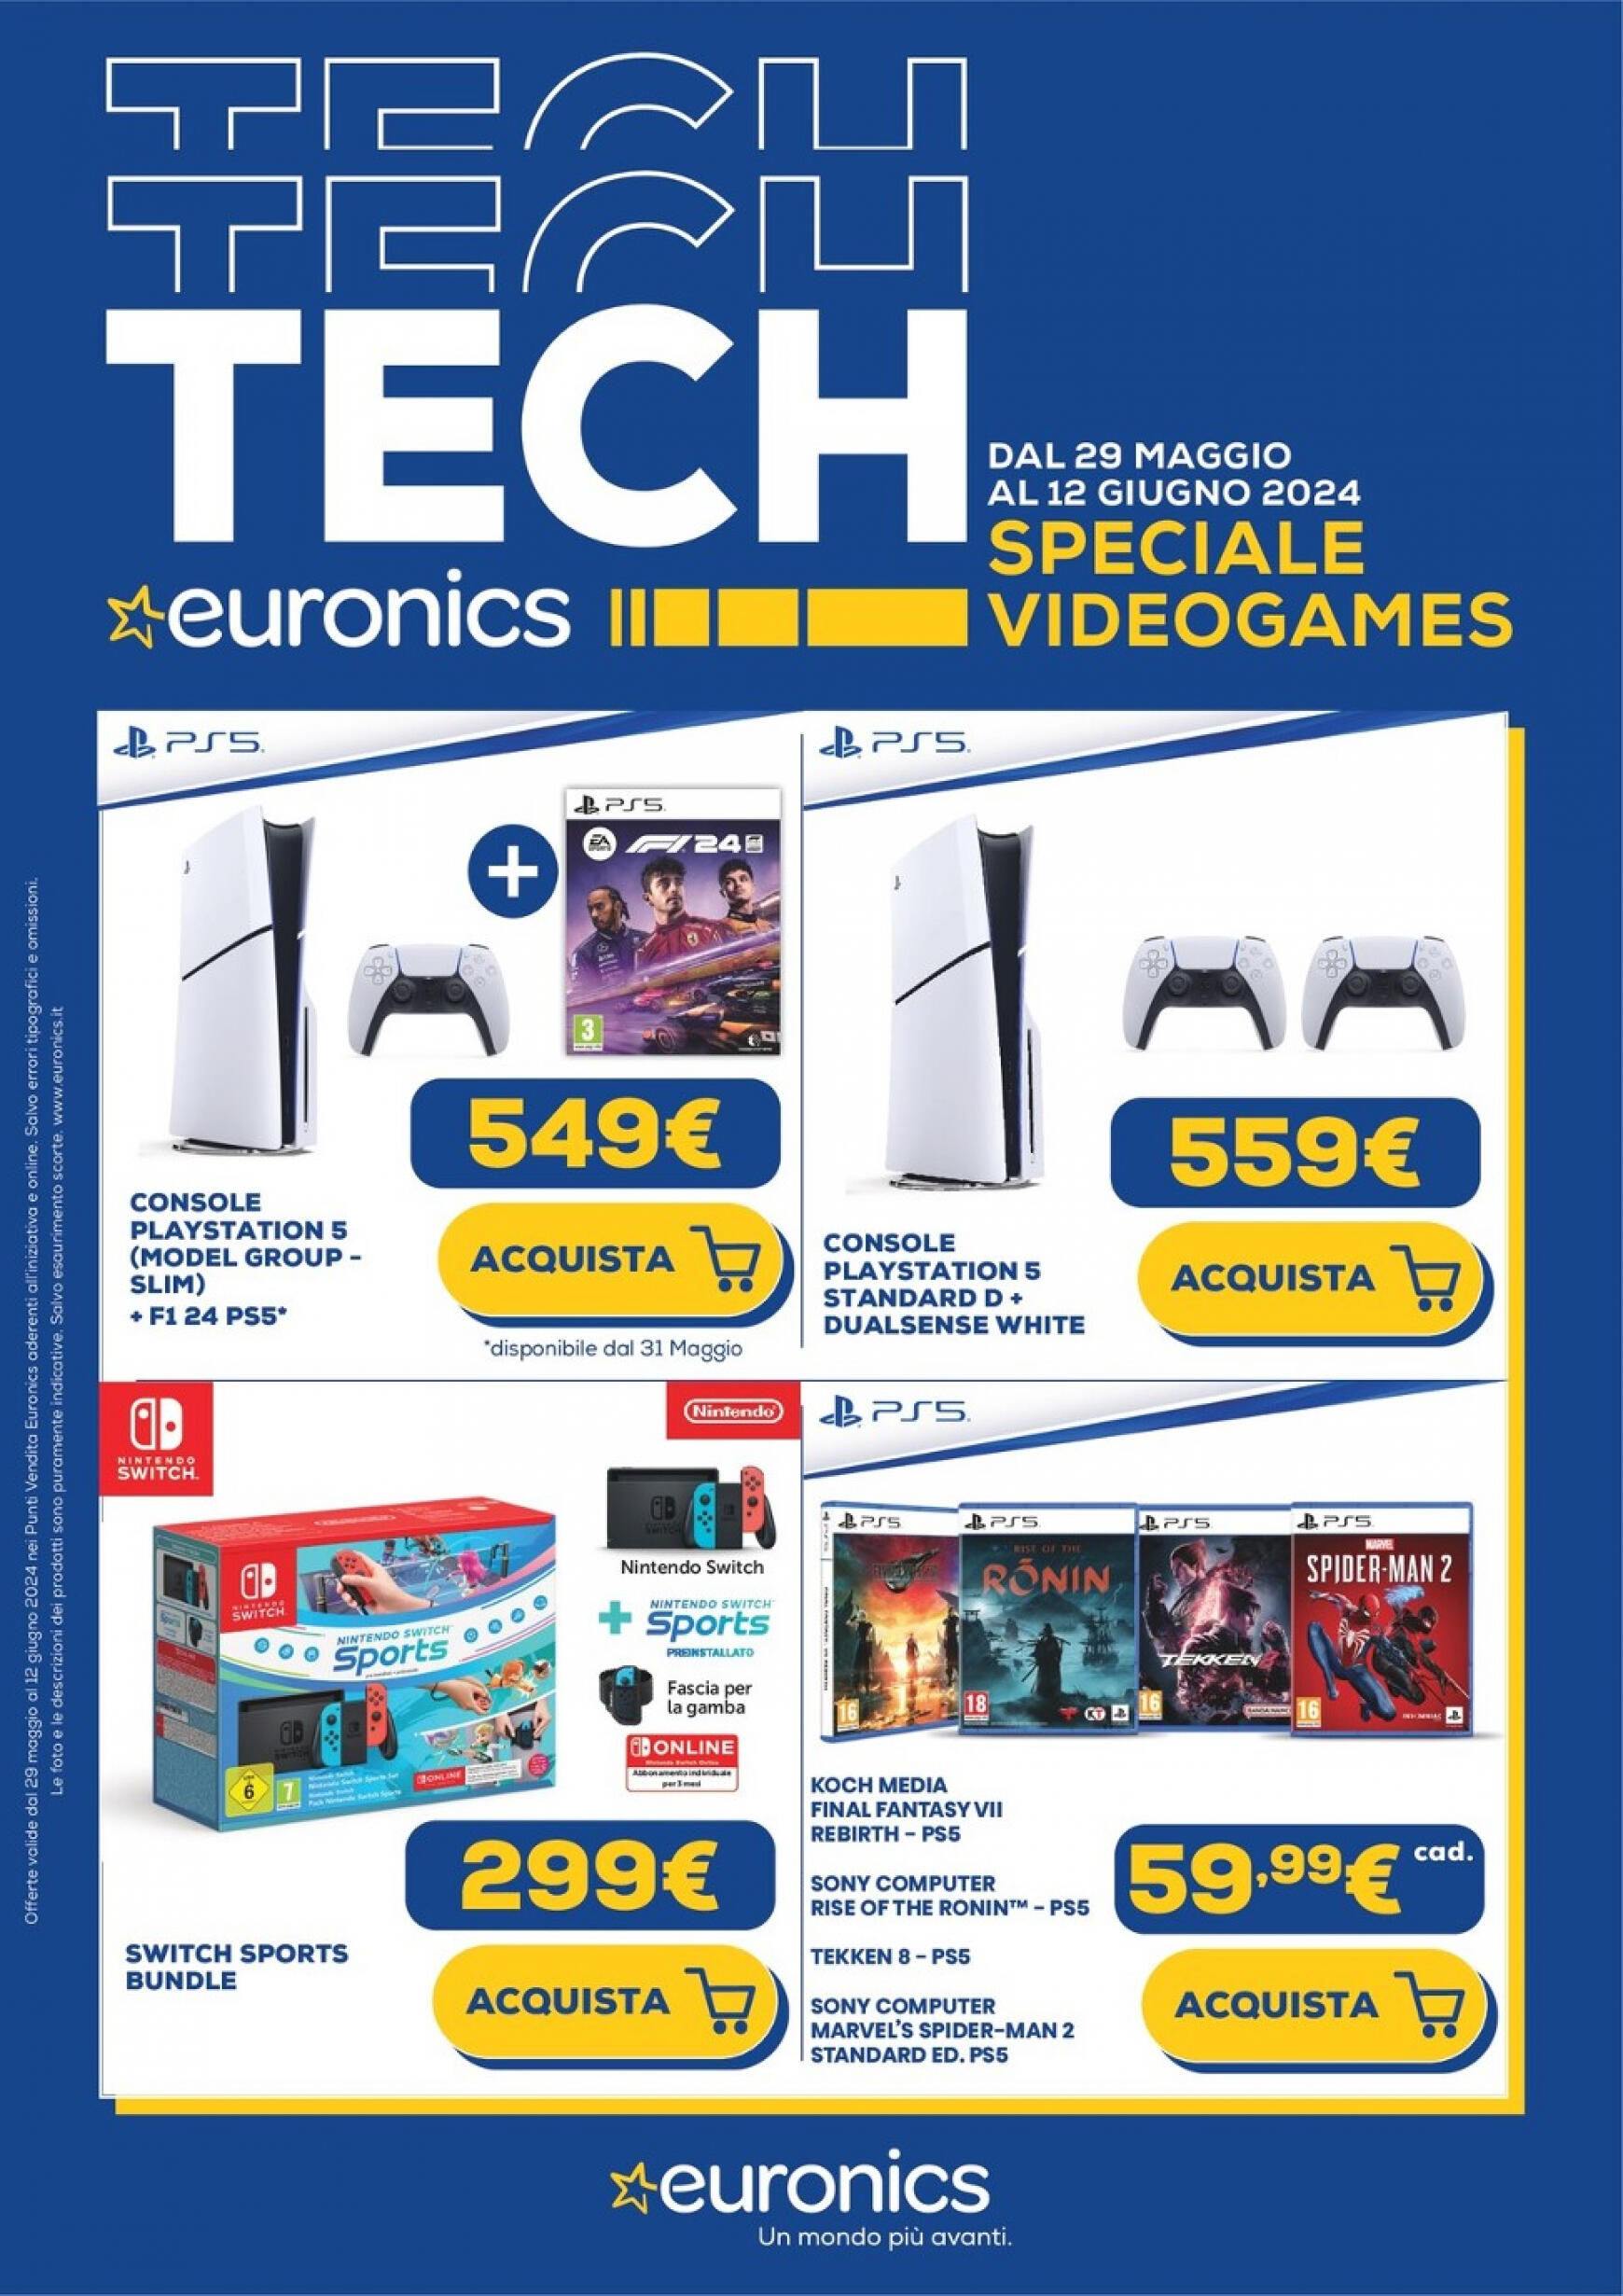 euronics - Nuovo volantino Euronics - Speciale Videogames 29.05. - 12.06.